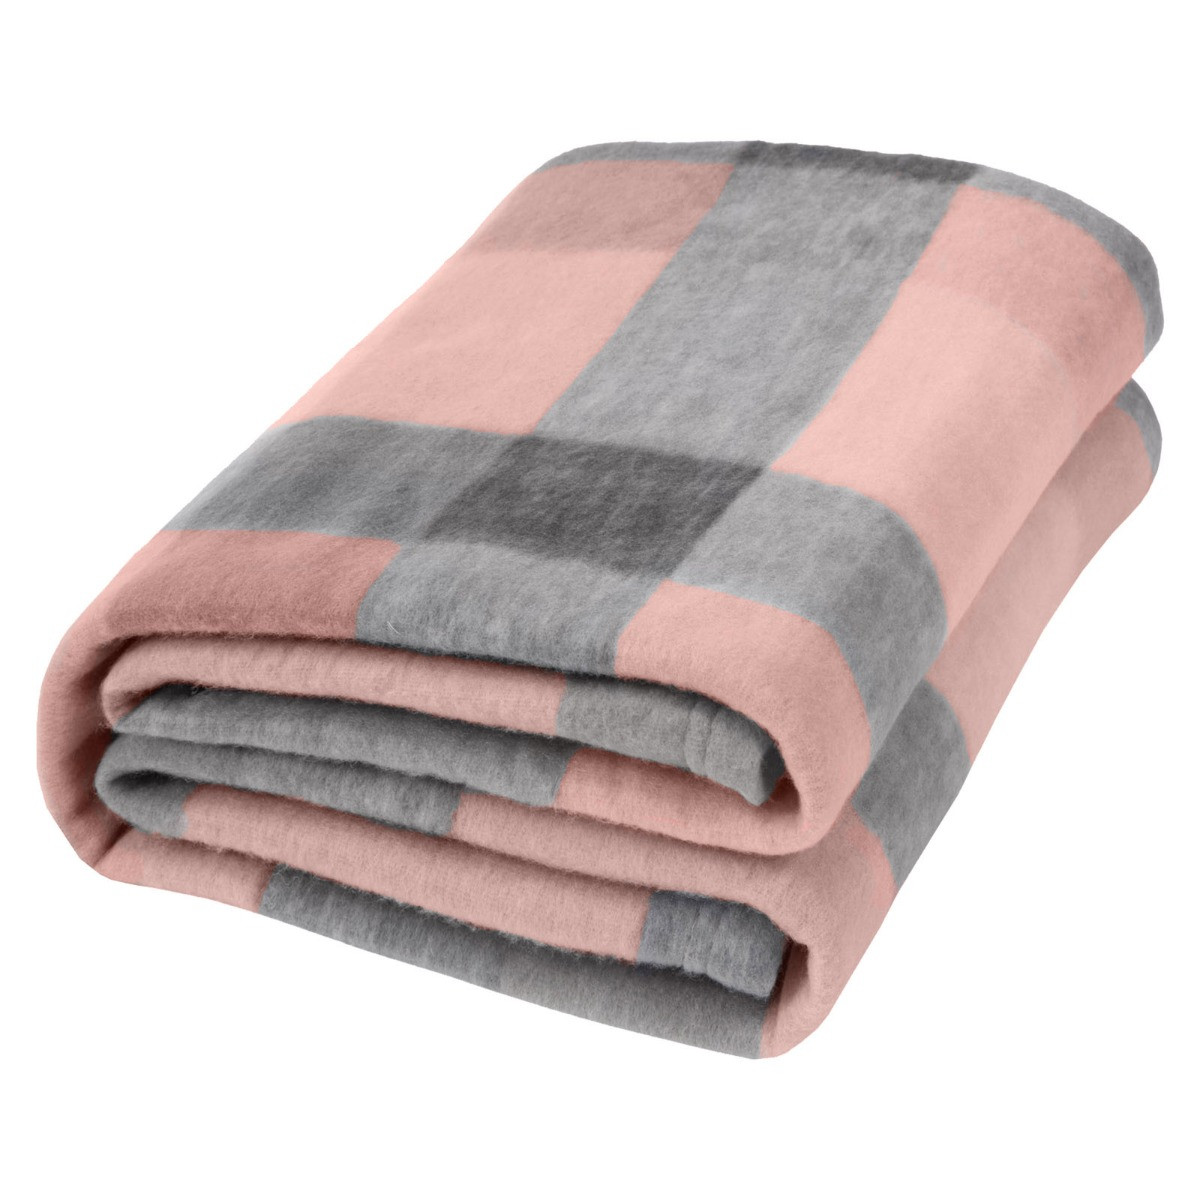 Dreamscene by OHS Tartan Check Fleece Throw, Blush Pink/Grey - 50 x 60 inches>